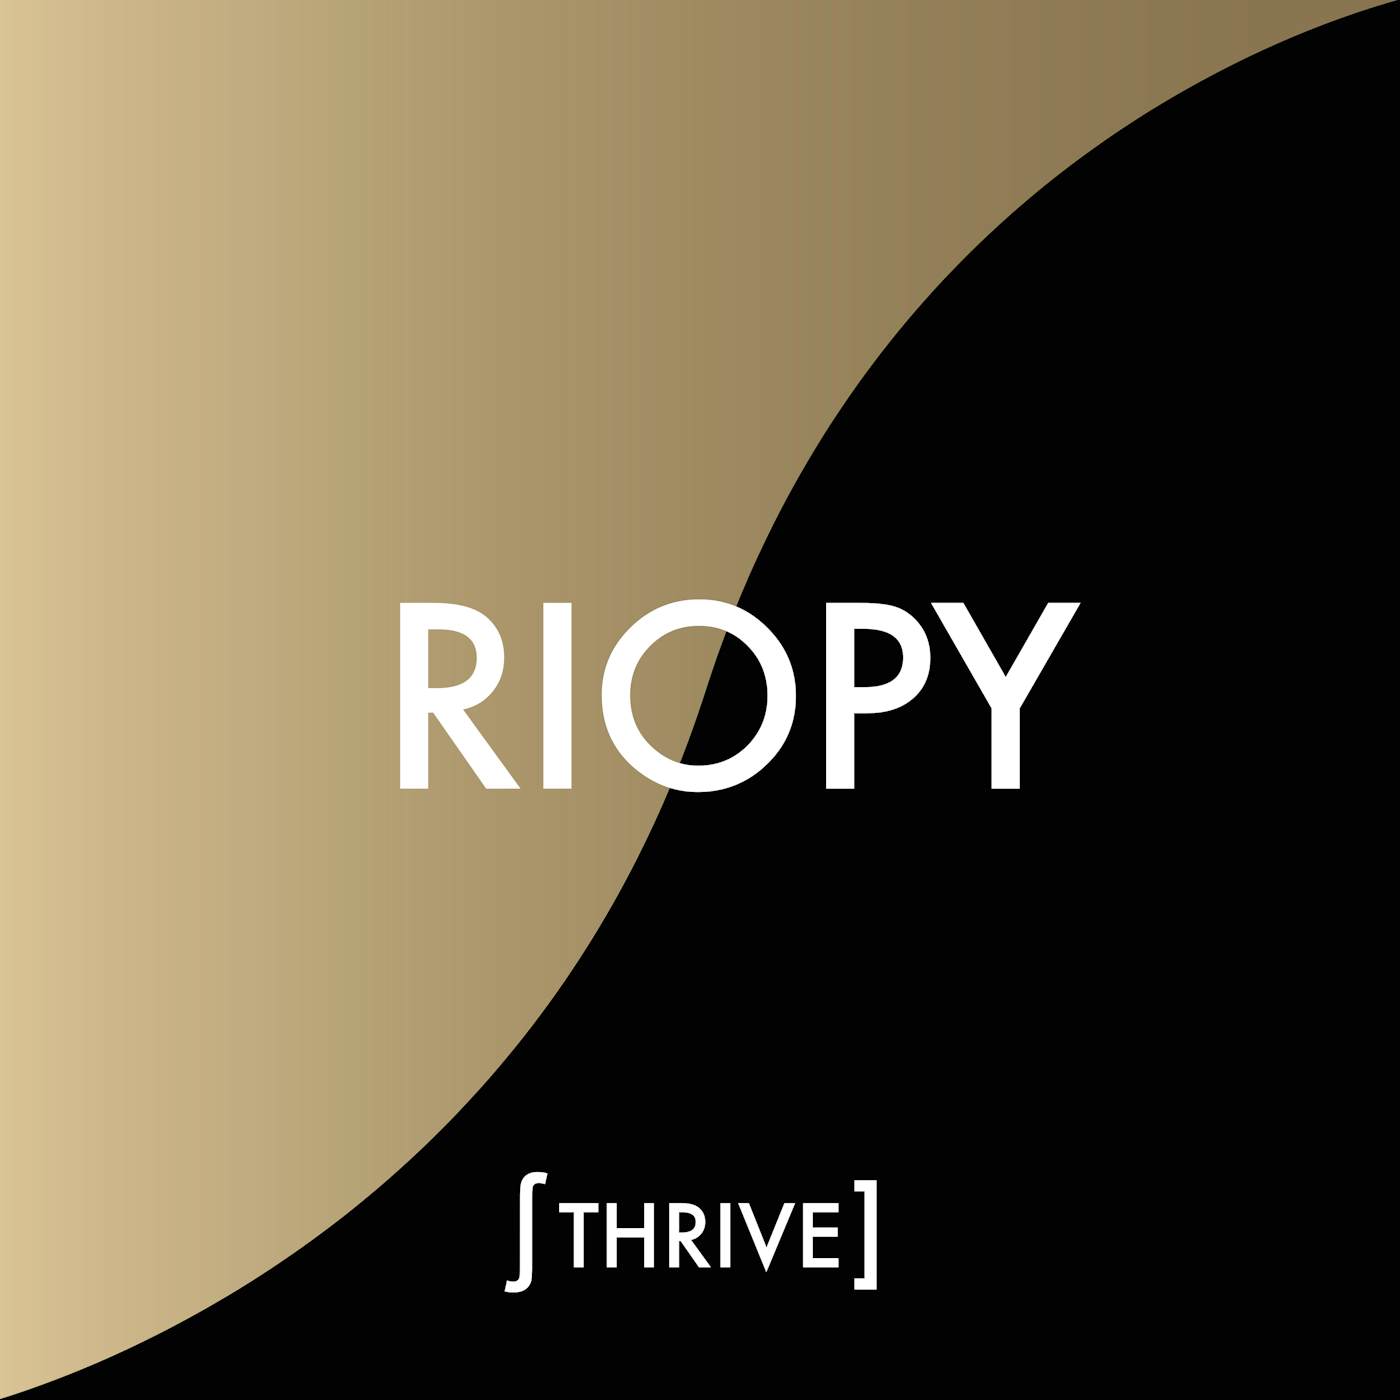 RIOPY Thrive Vinyl Record